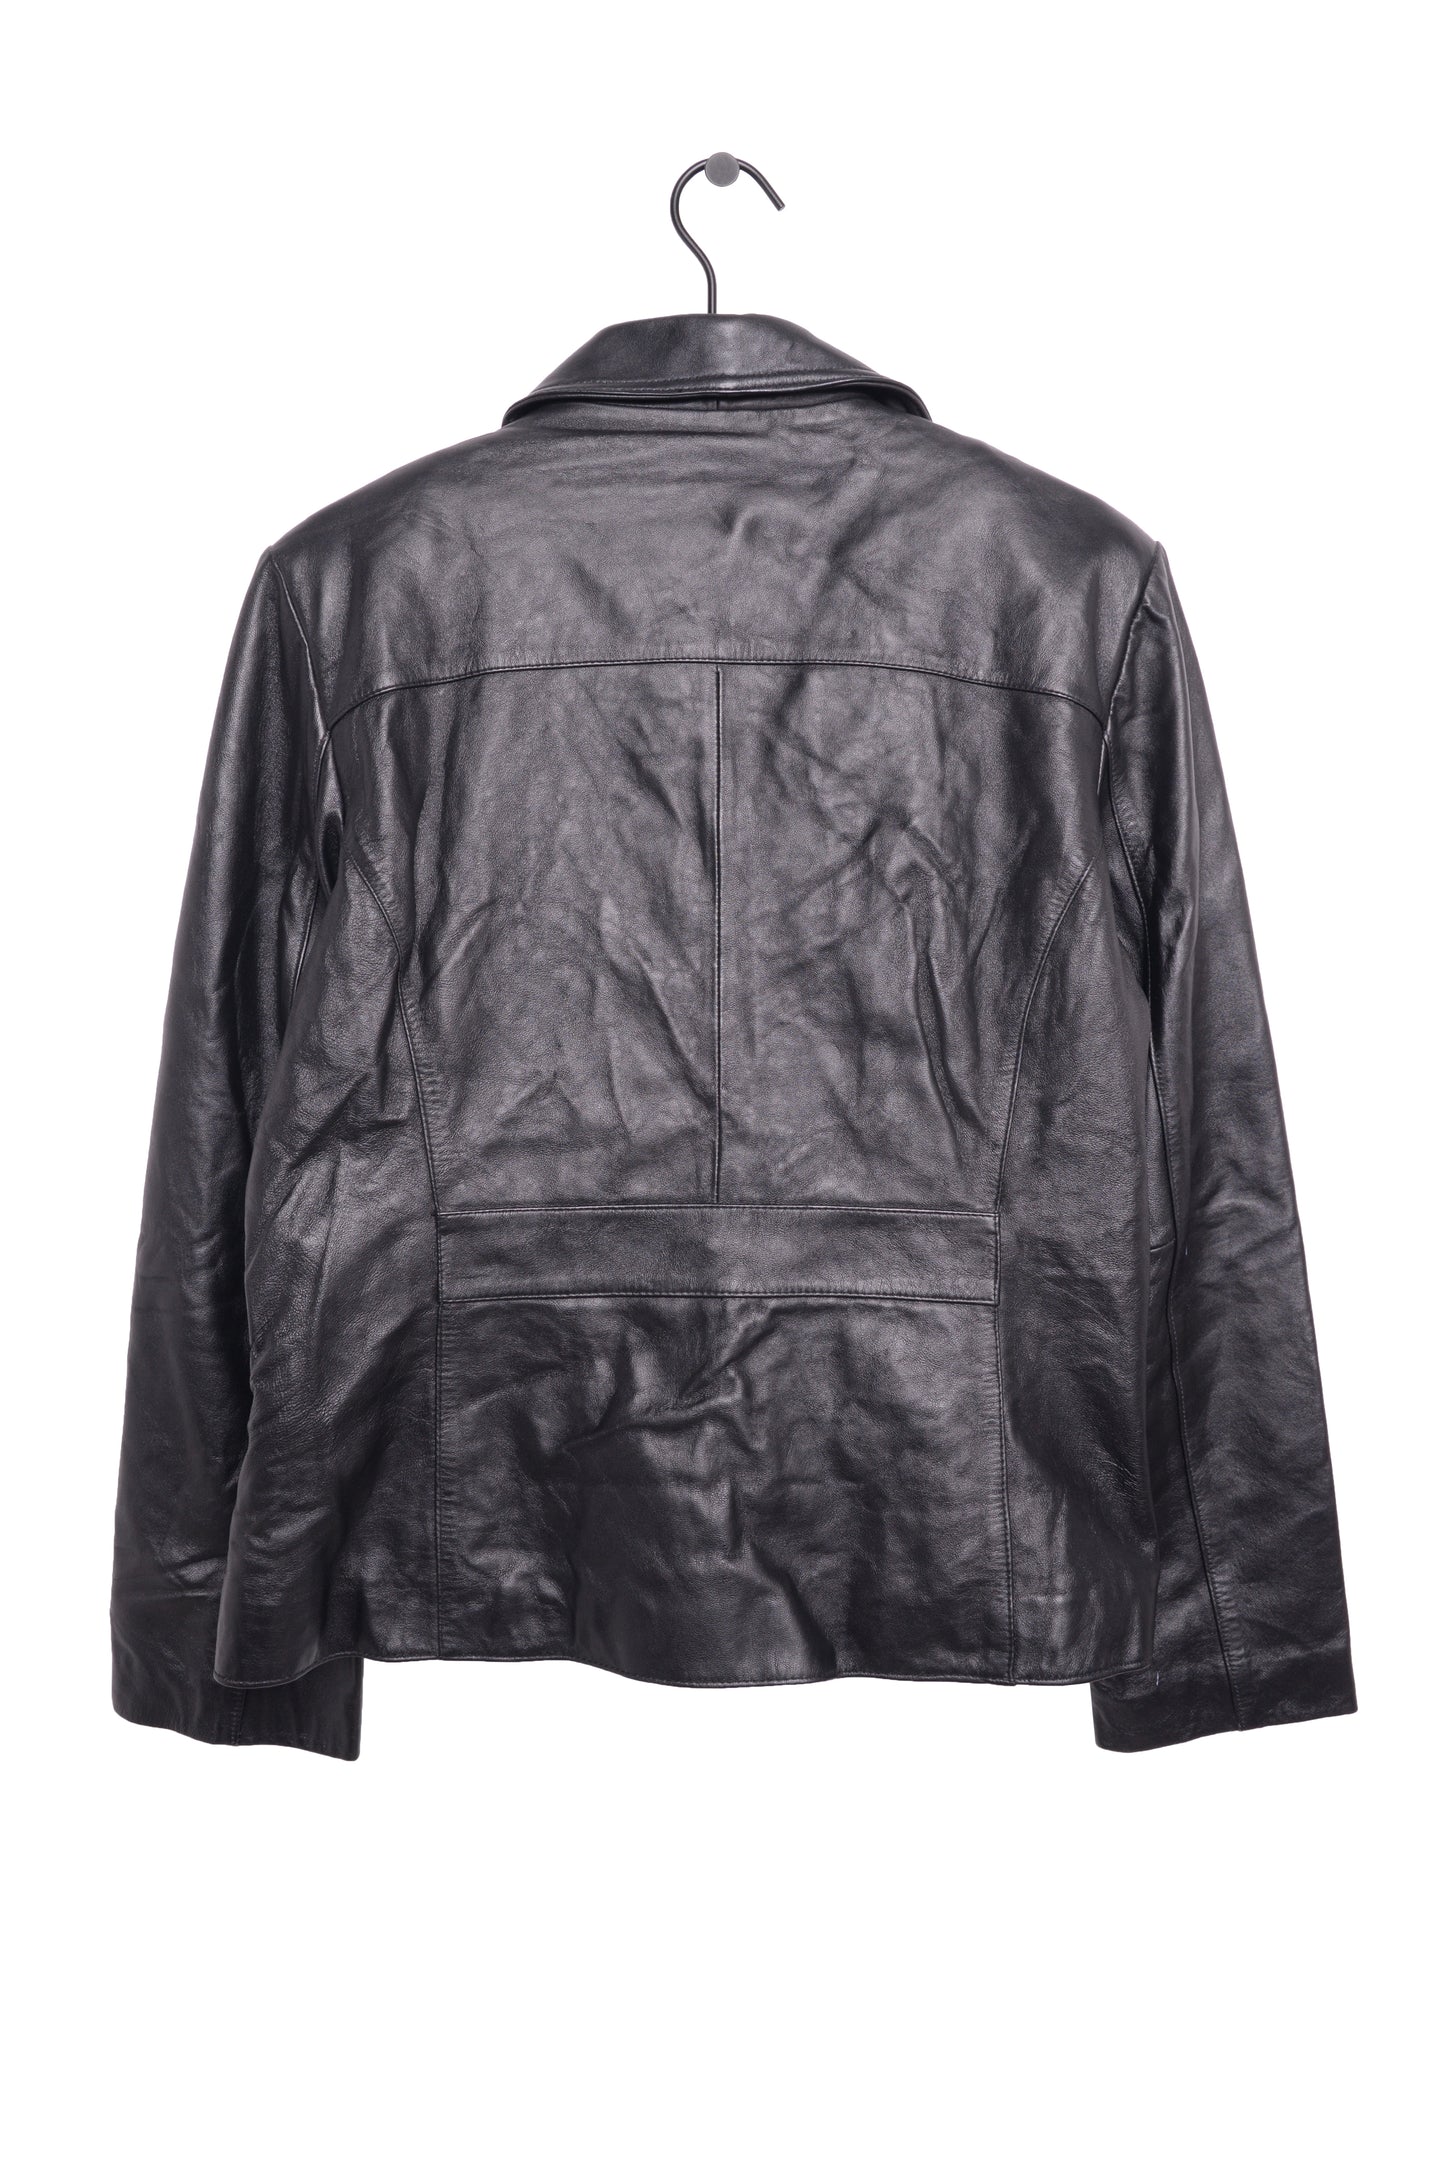 1990s Wilson's Leather Jacket